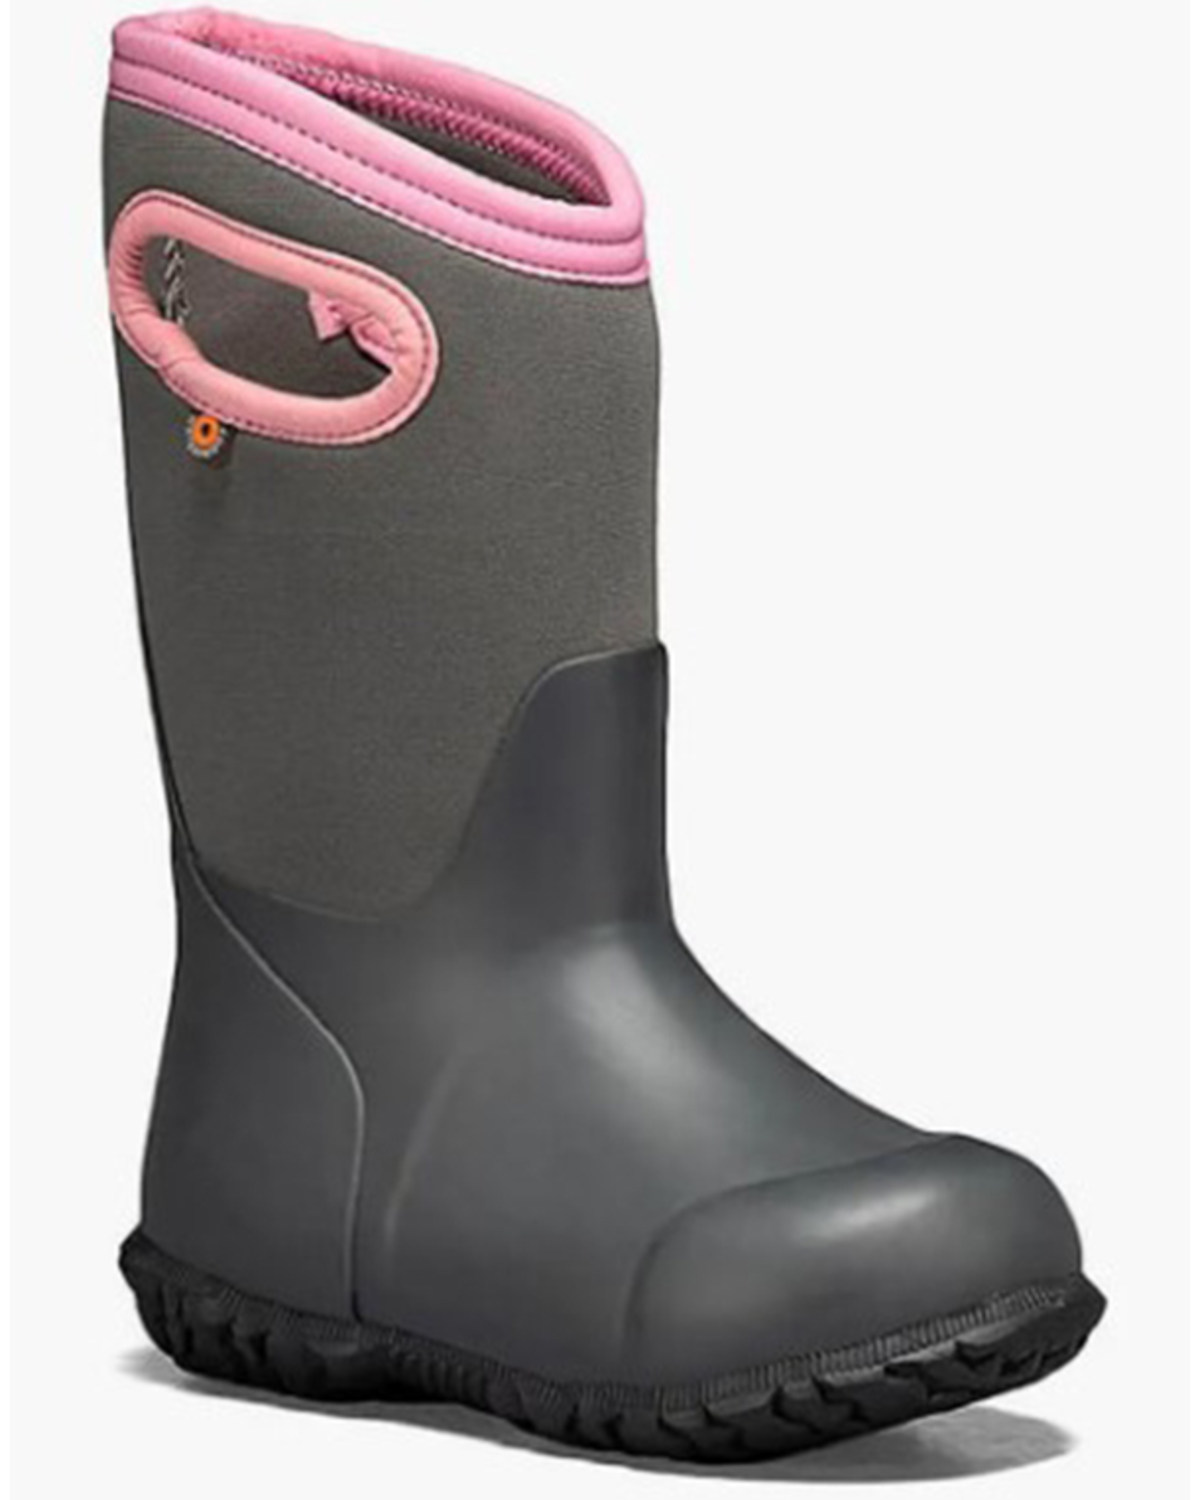 Bogs Girls' York Solid Rain Boots - Round Toe